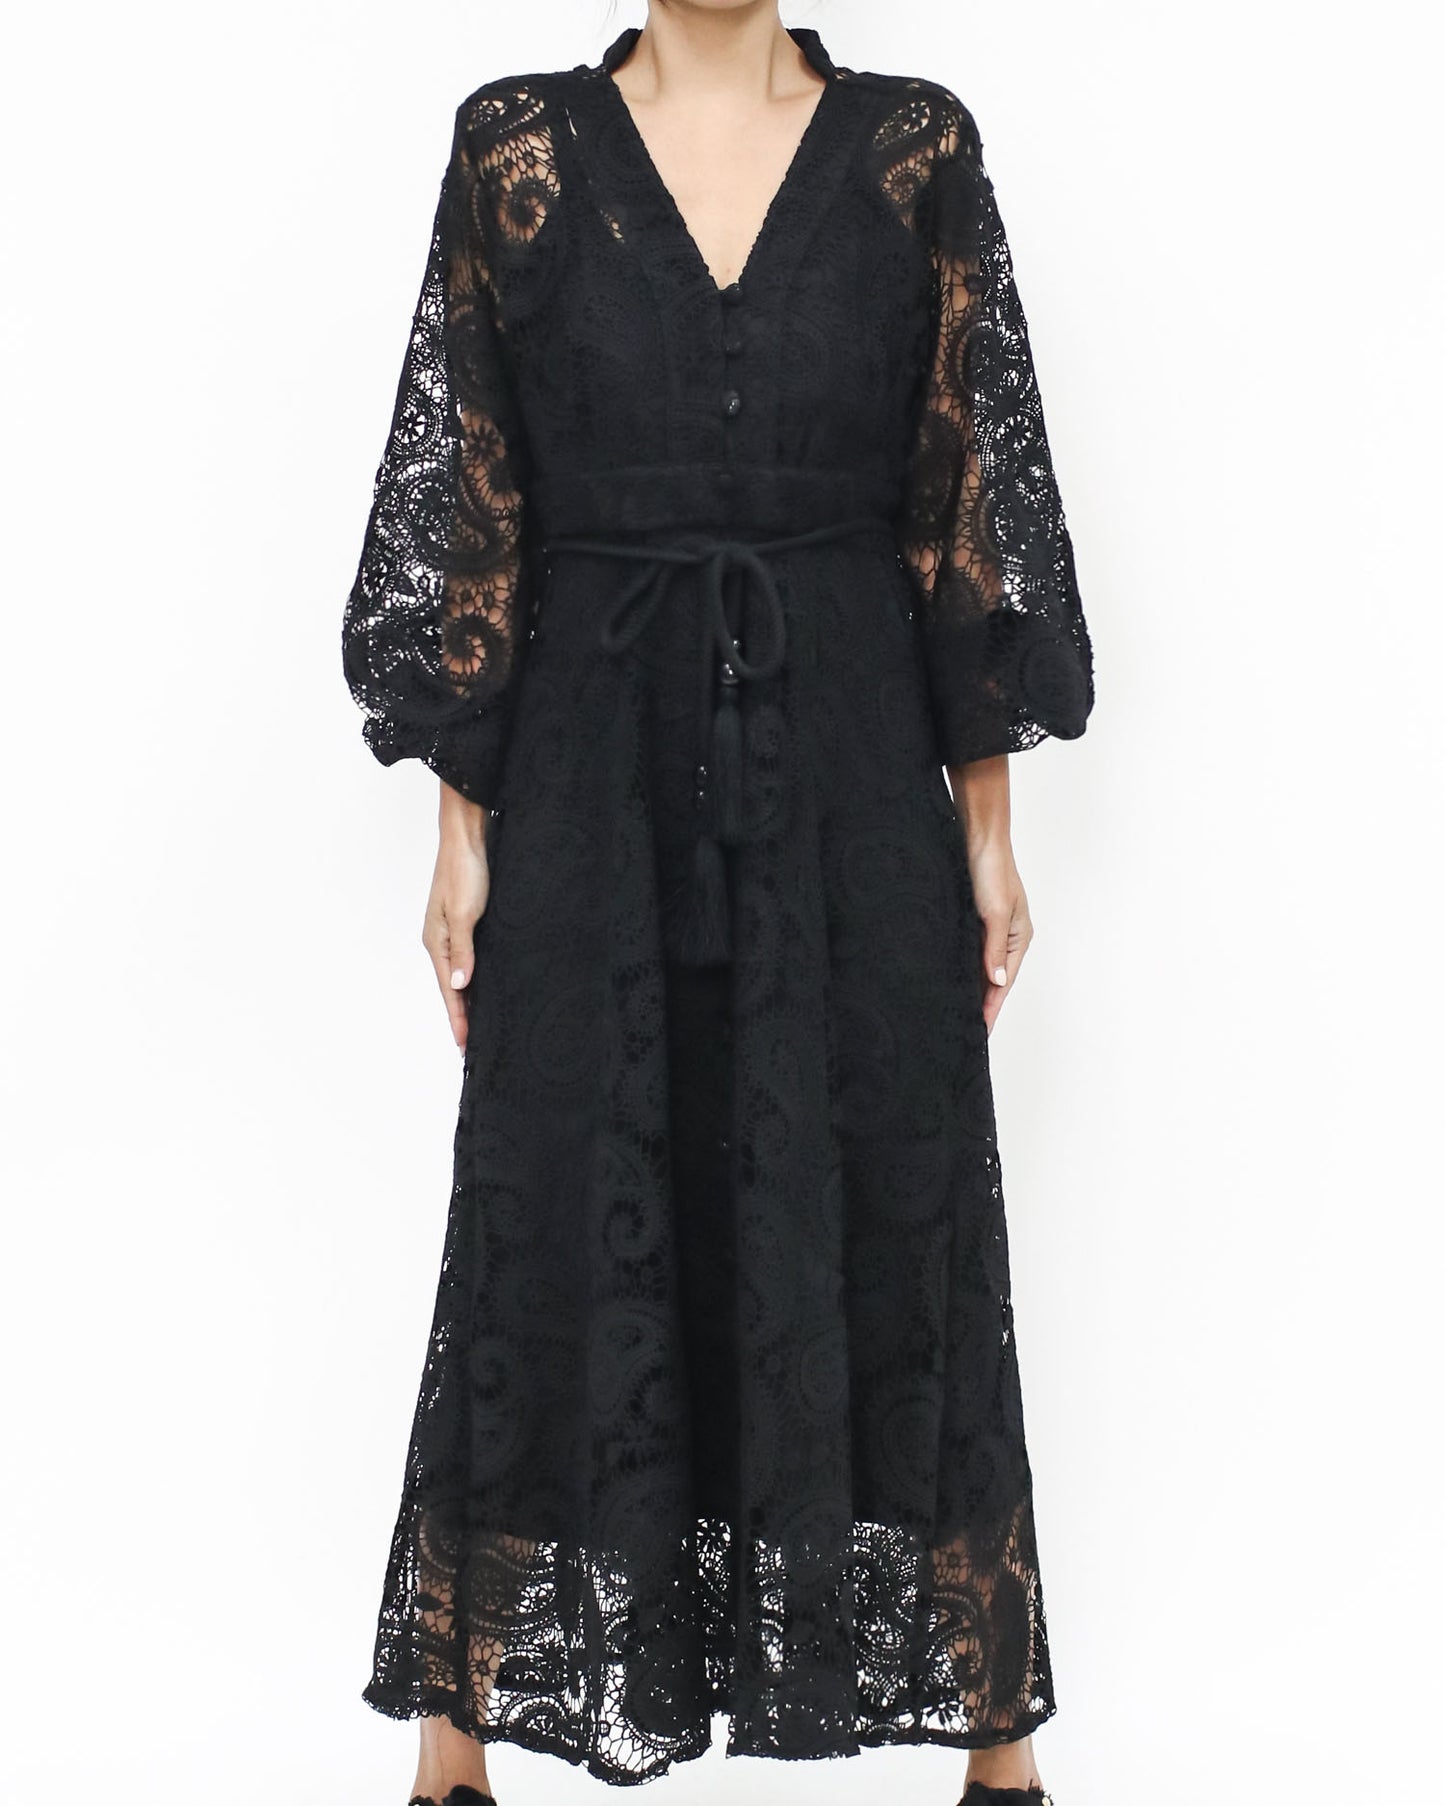 black crochet lace longline dress with rope belt *pre-order*